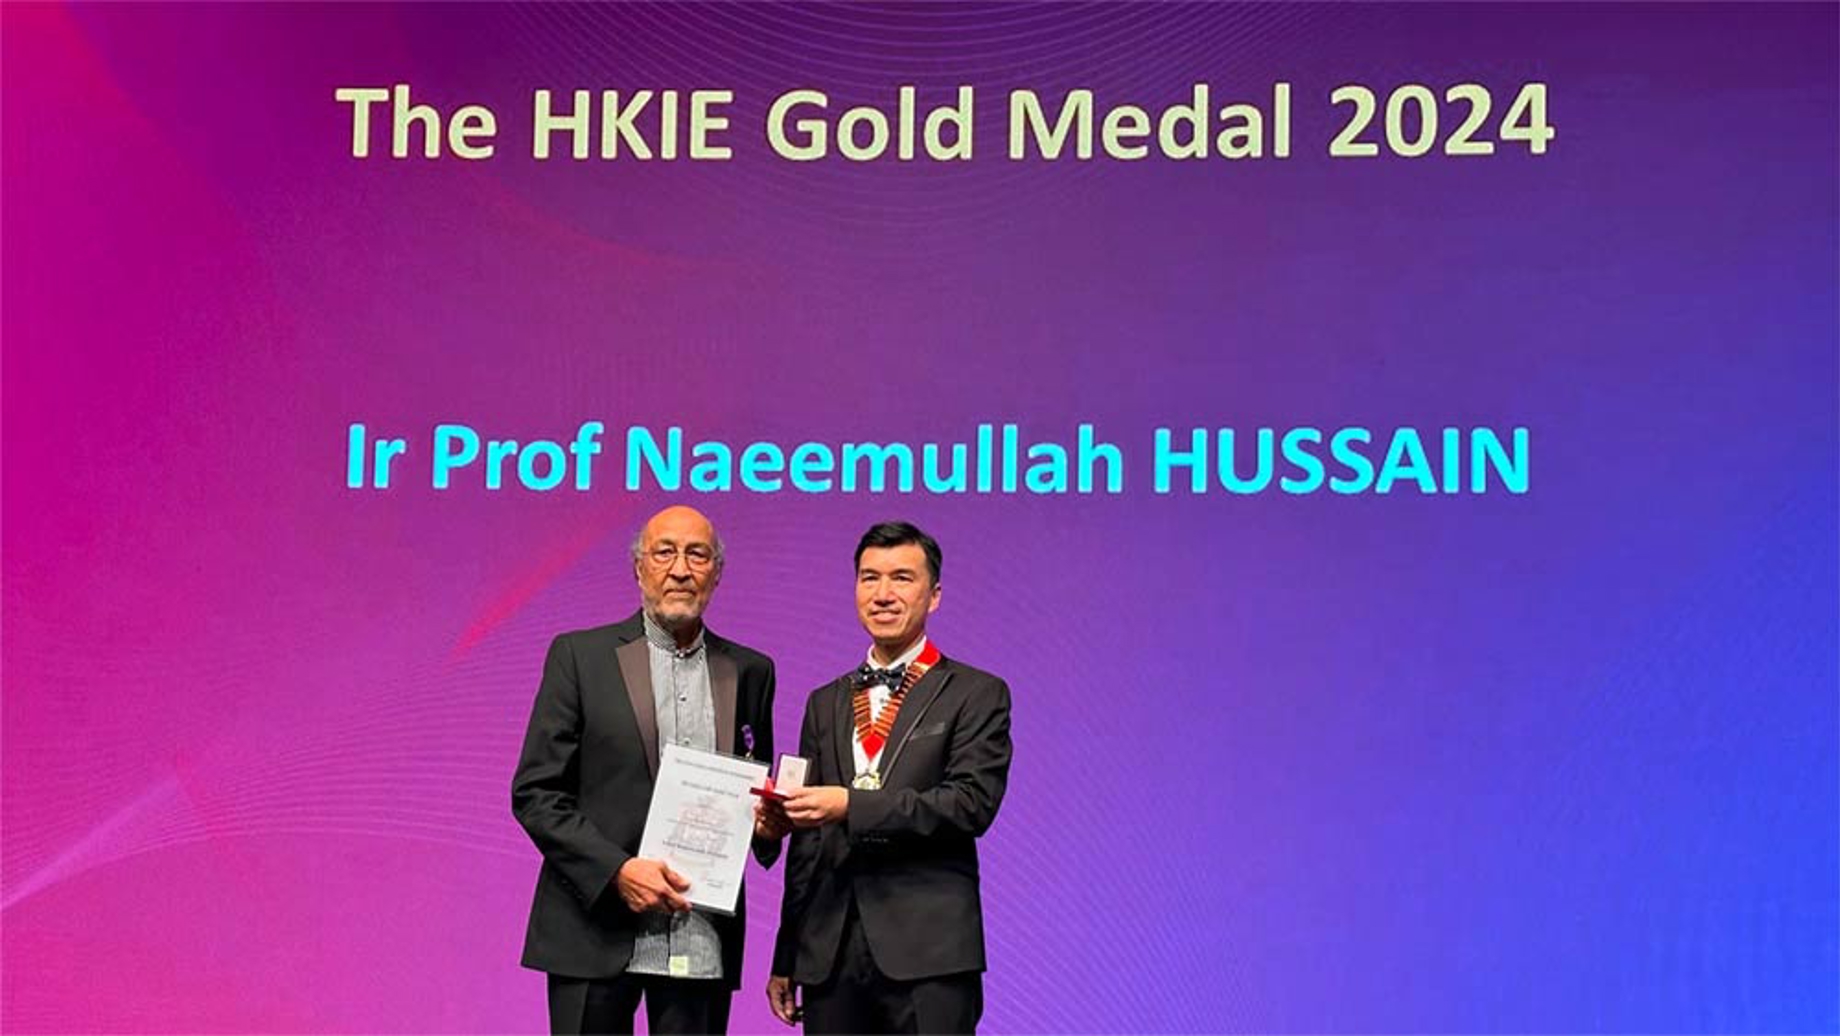 Professor Naeemullah Hussain receives the HKIE Gold Medal 2024